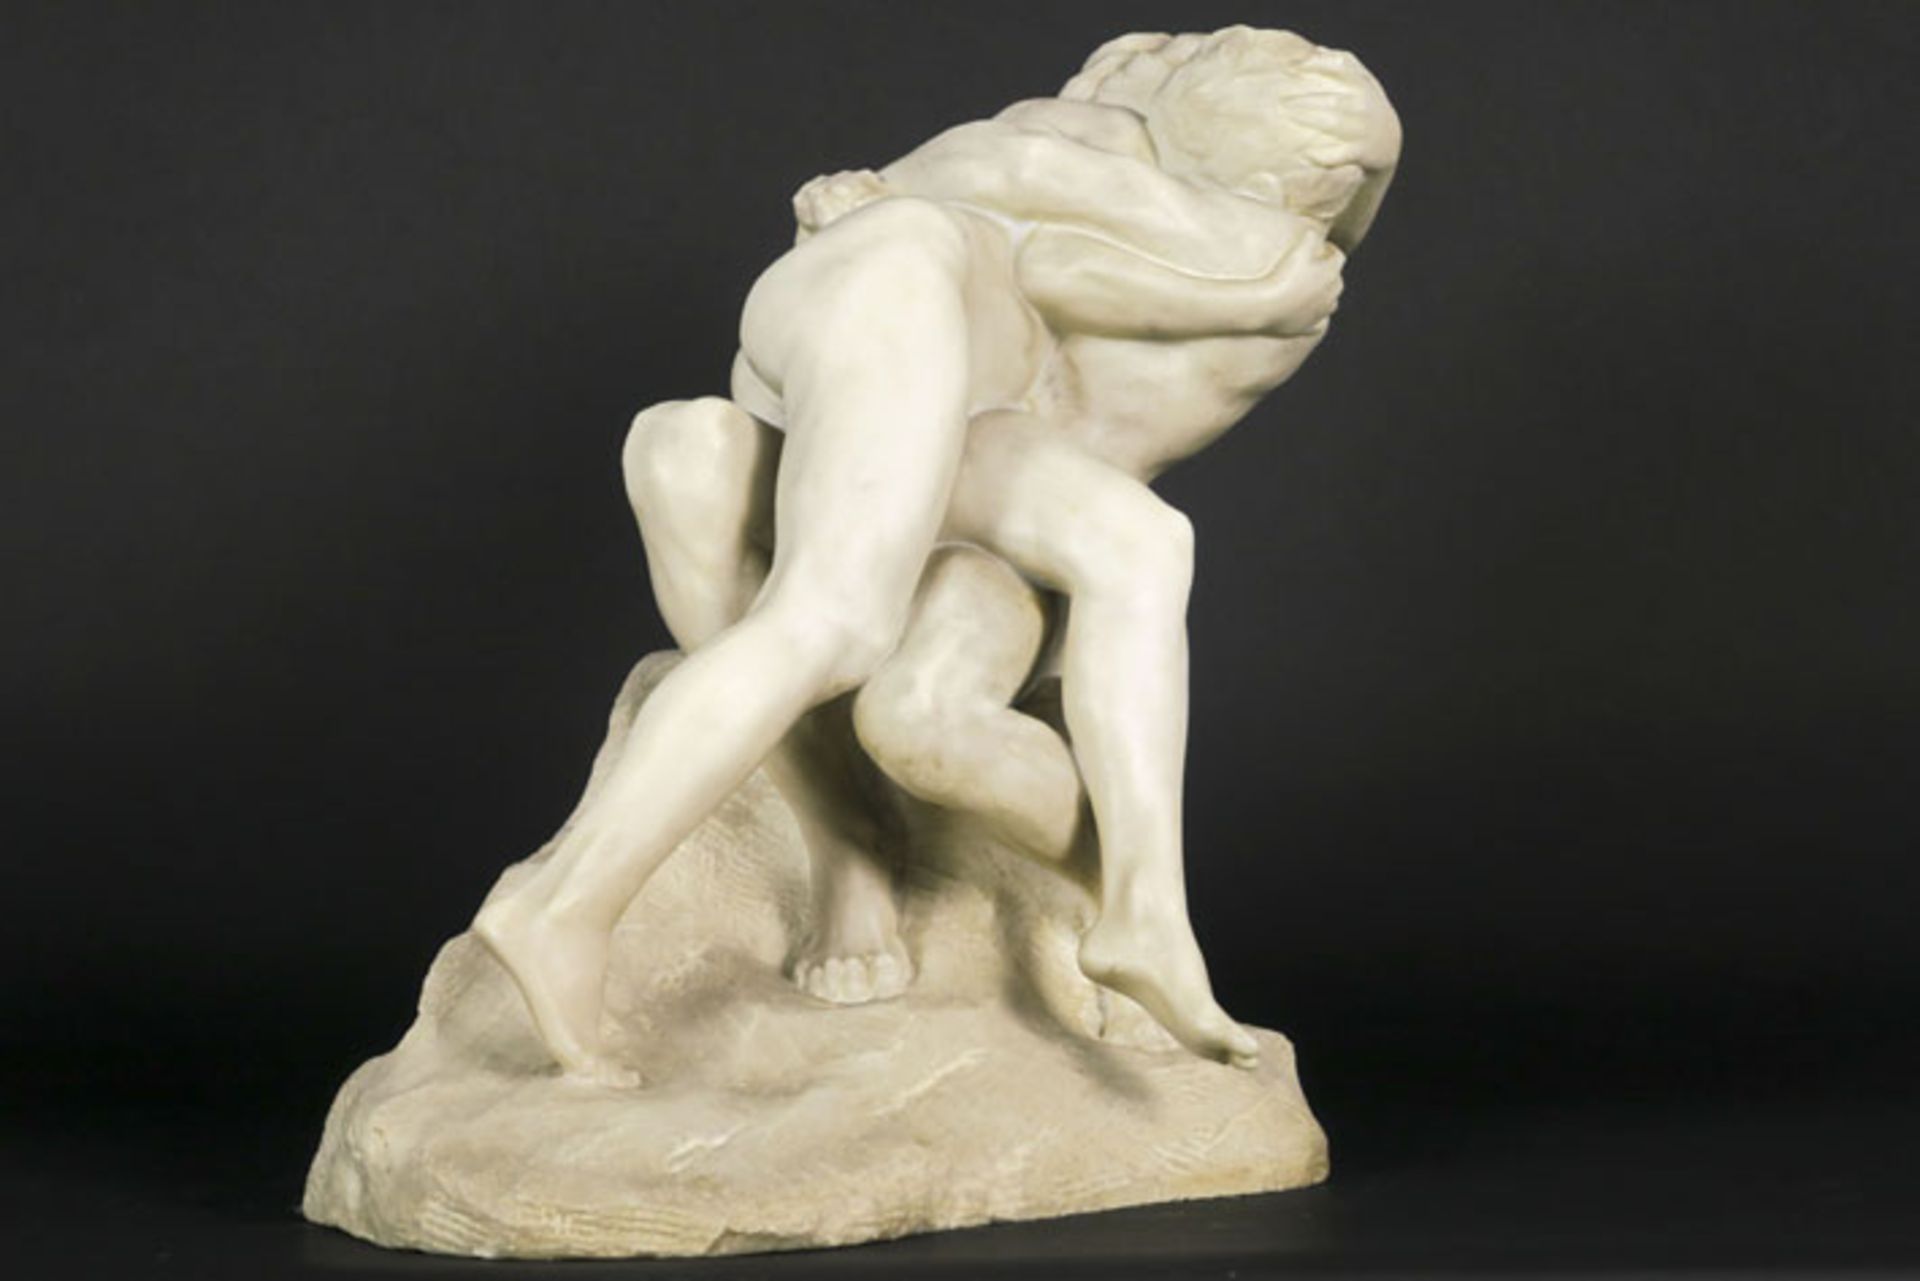 19th/20th Cent. Belgian sculpture in marble - signed Godefroid de Vreese - - DE [...] - Bild 5 aus 5